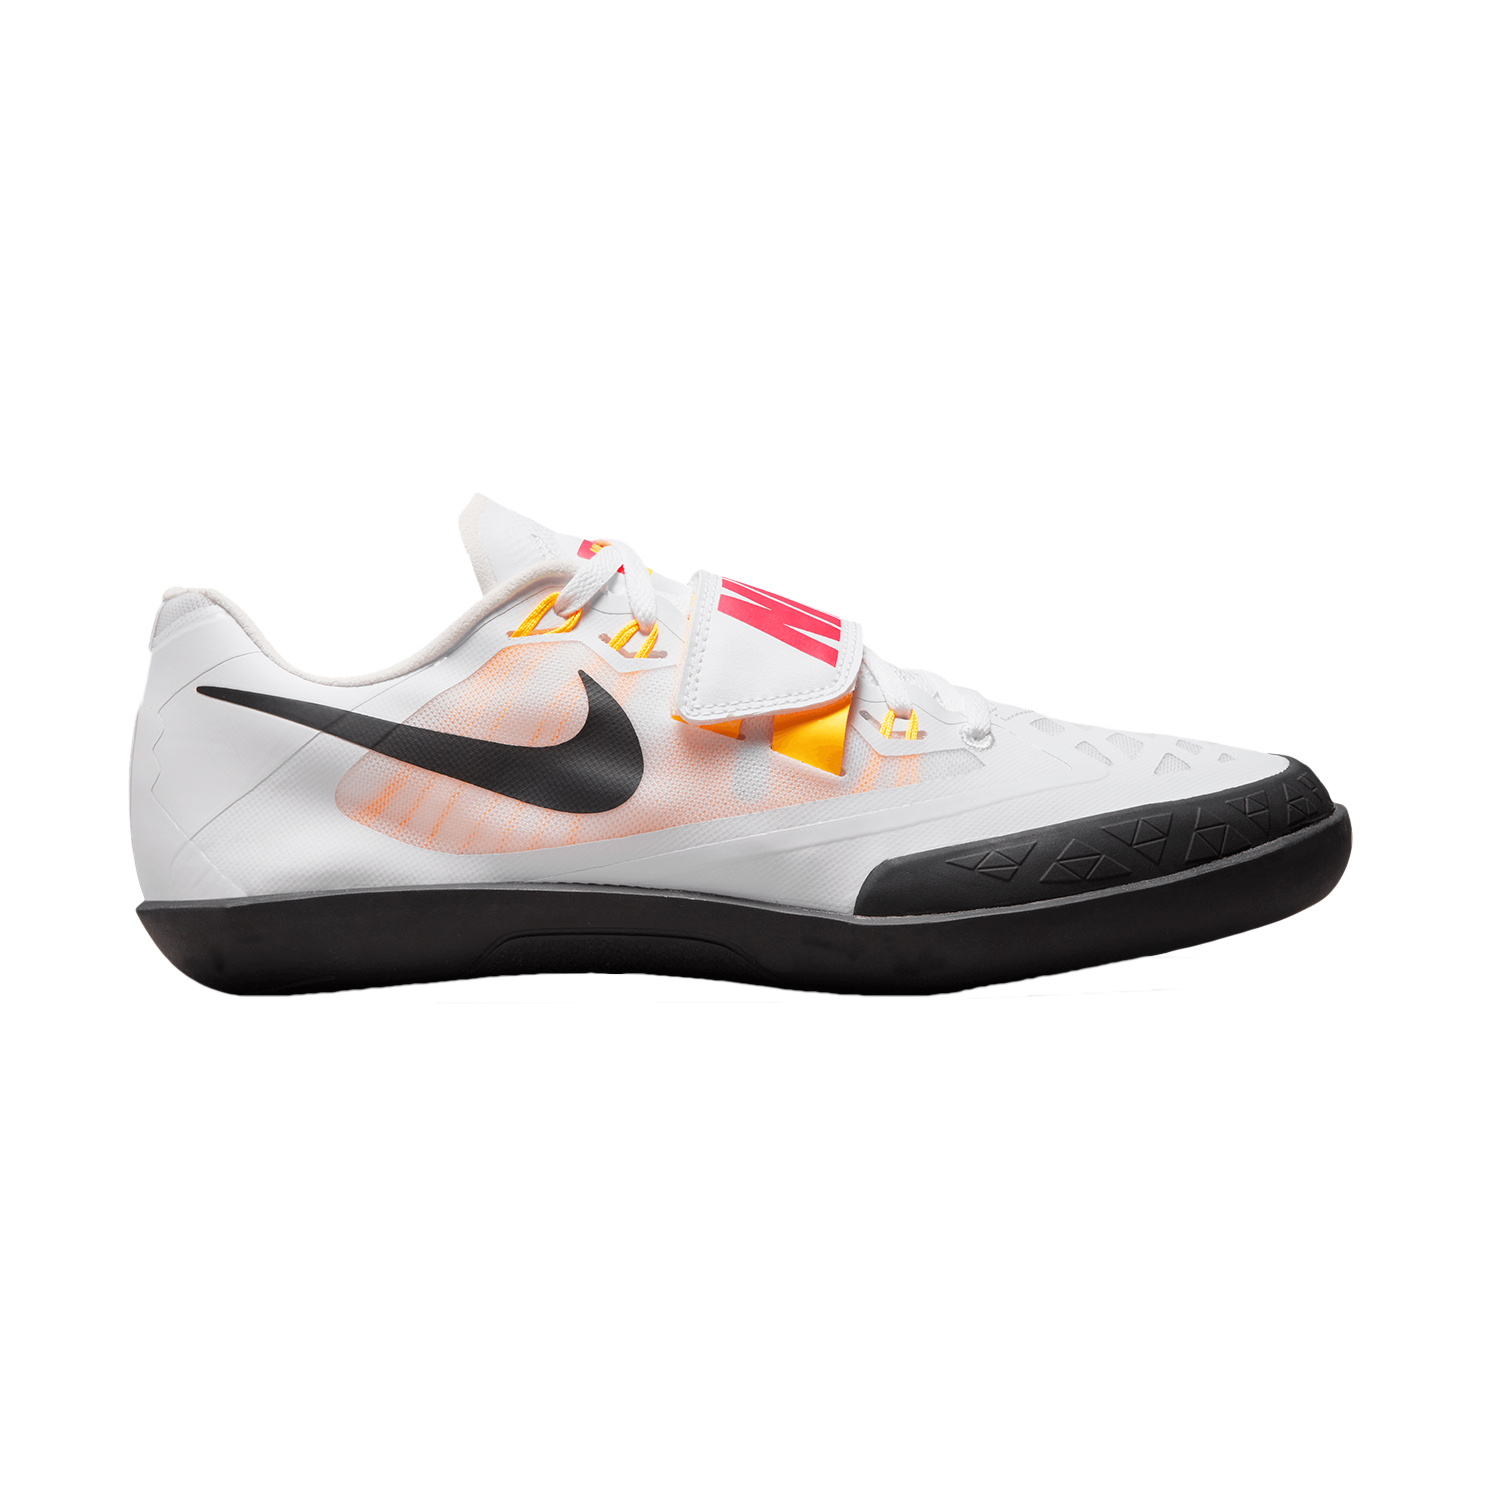 Nike Zoom SD Shoes - White/Black/Hyper Pink/Orange